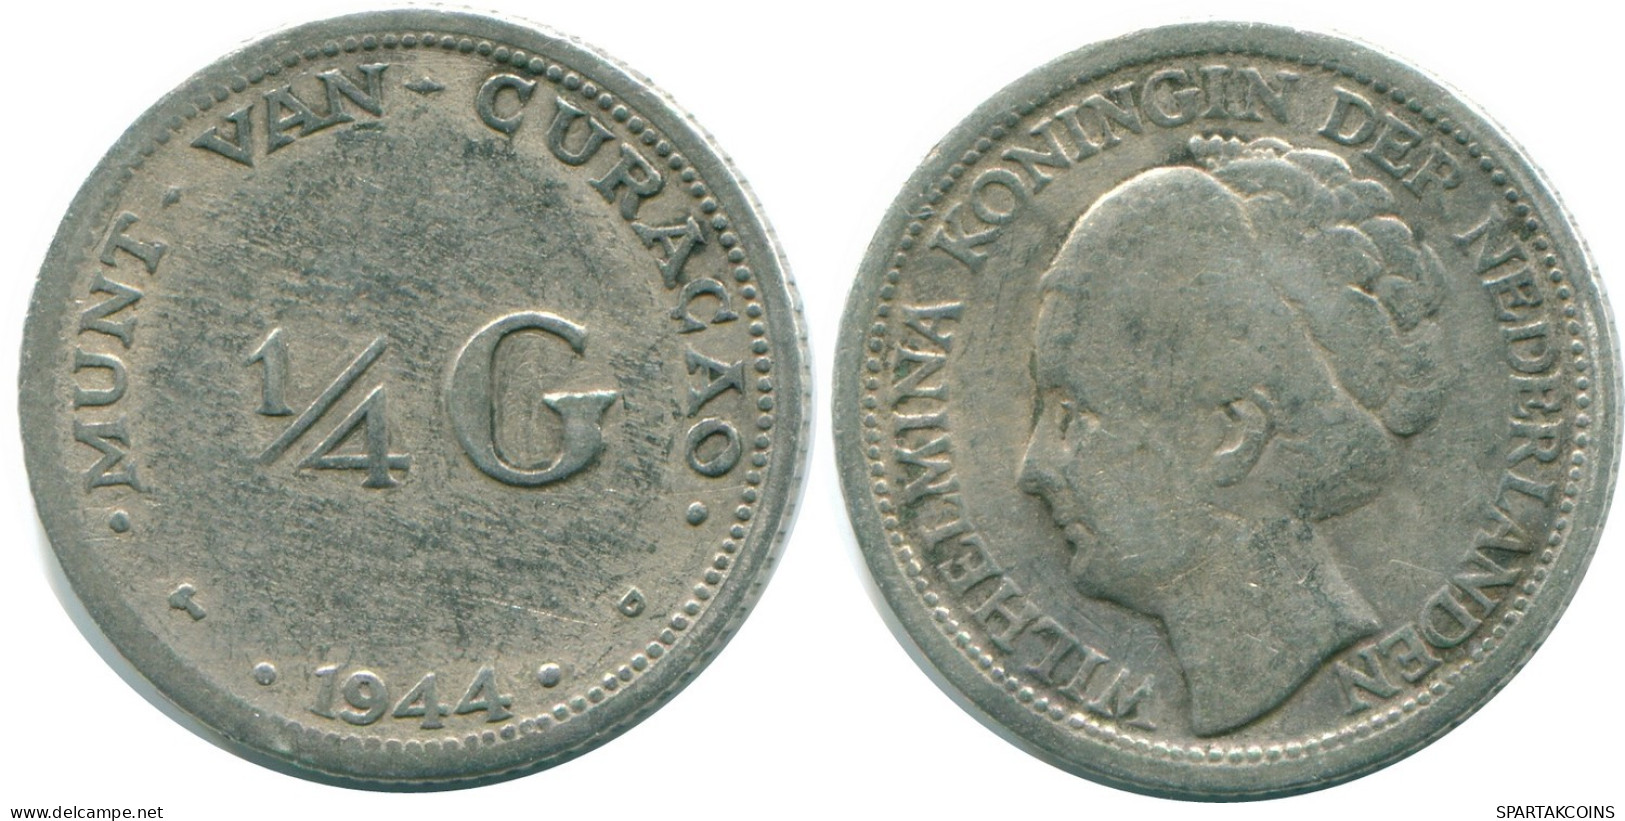 1/4 GULDEN 1944 CURACAO Netherlands SILVER Colonial Coin #NL10582.4.U.A - Curacao